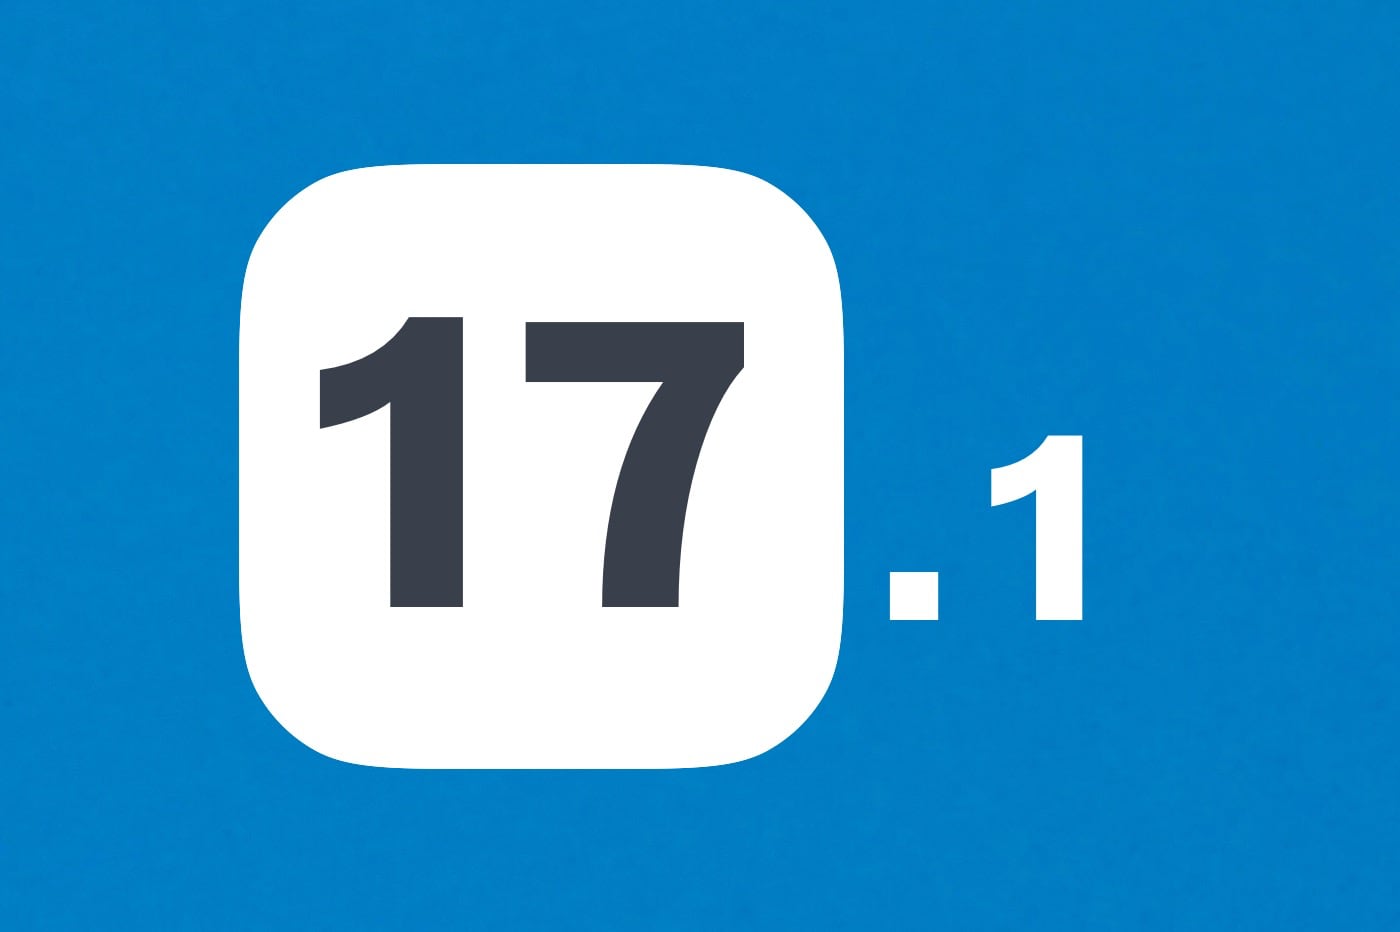 iOS 17.1 fond bleu